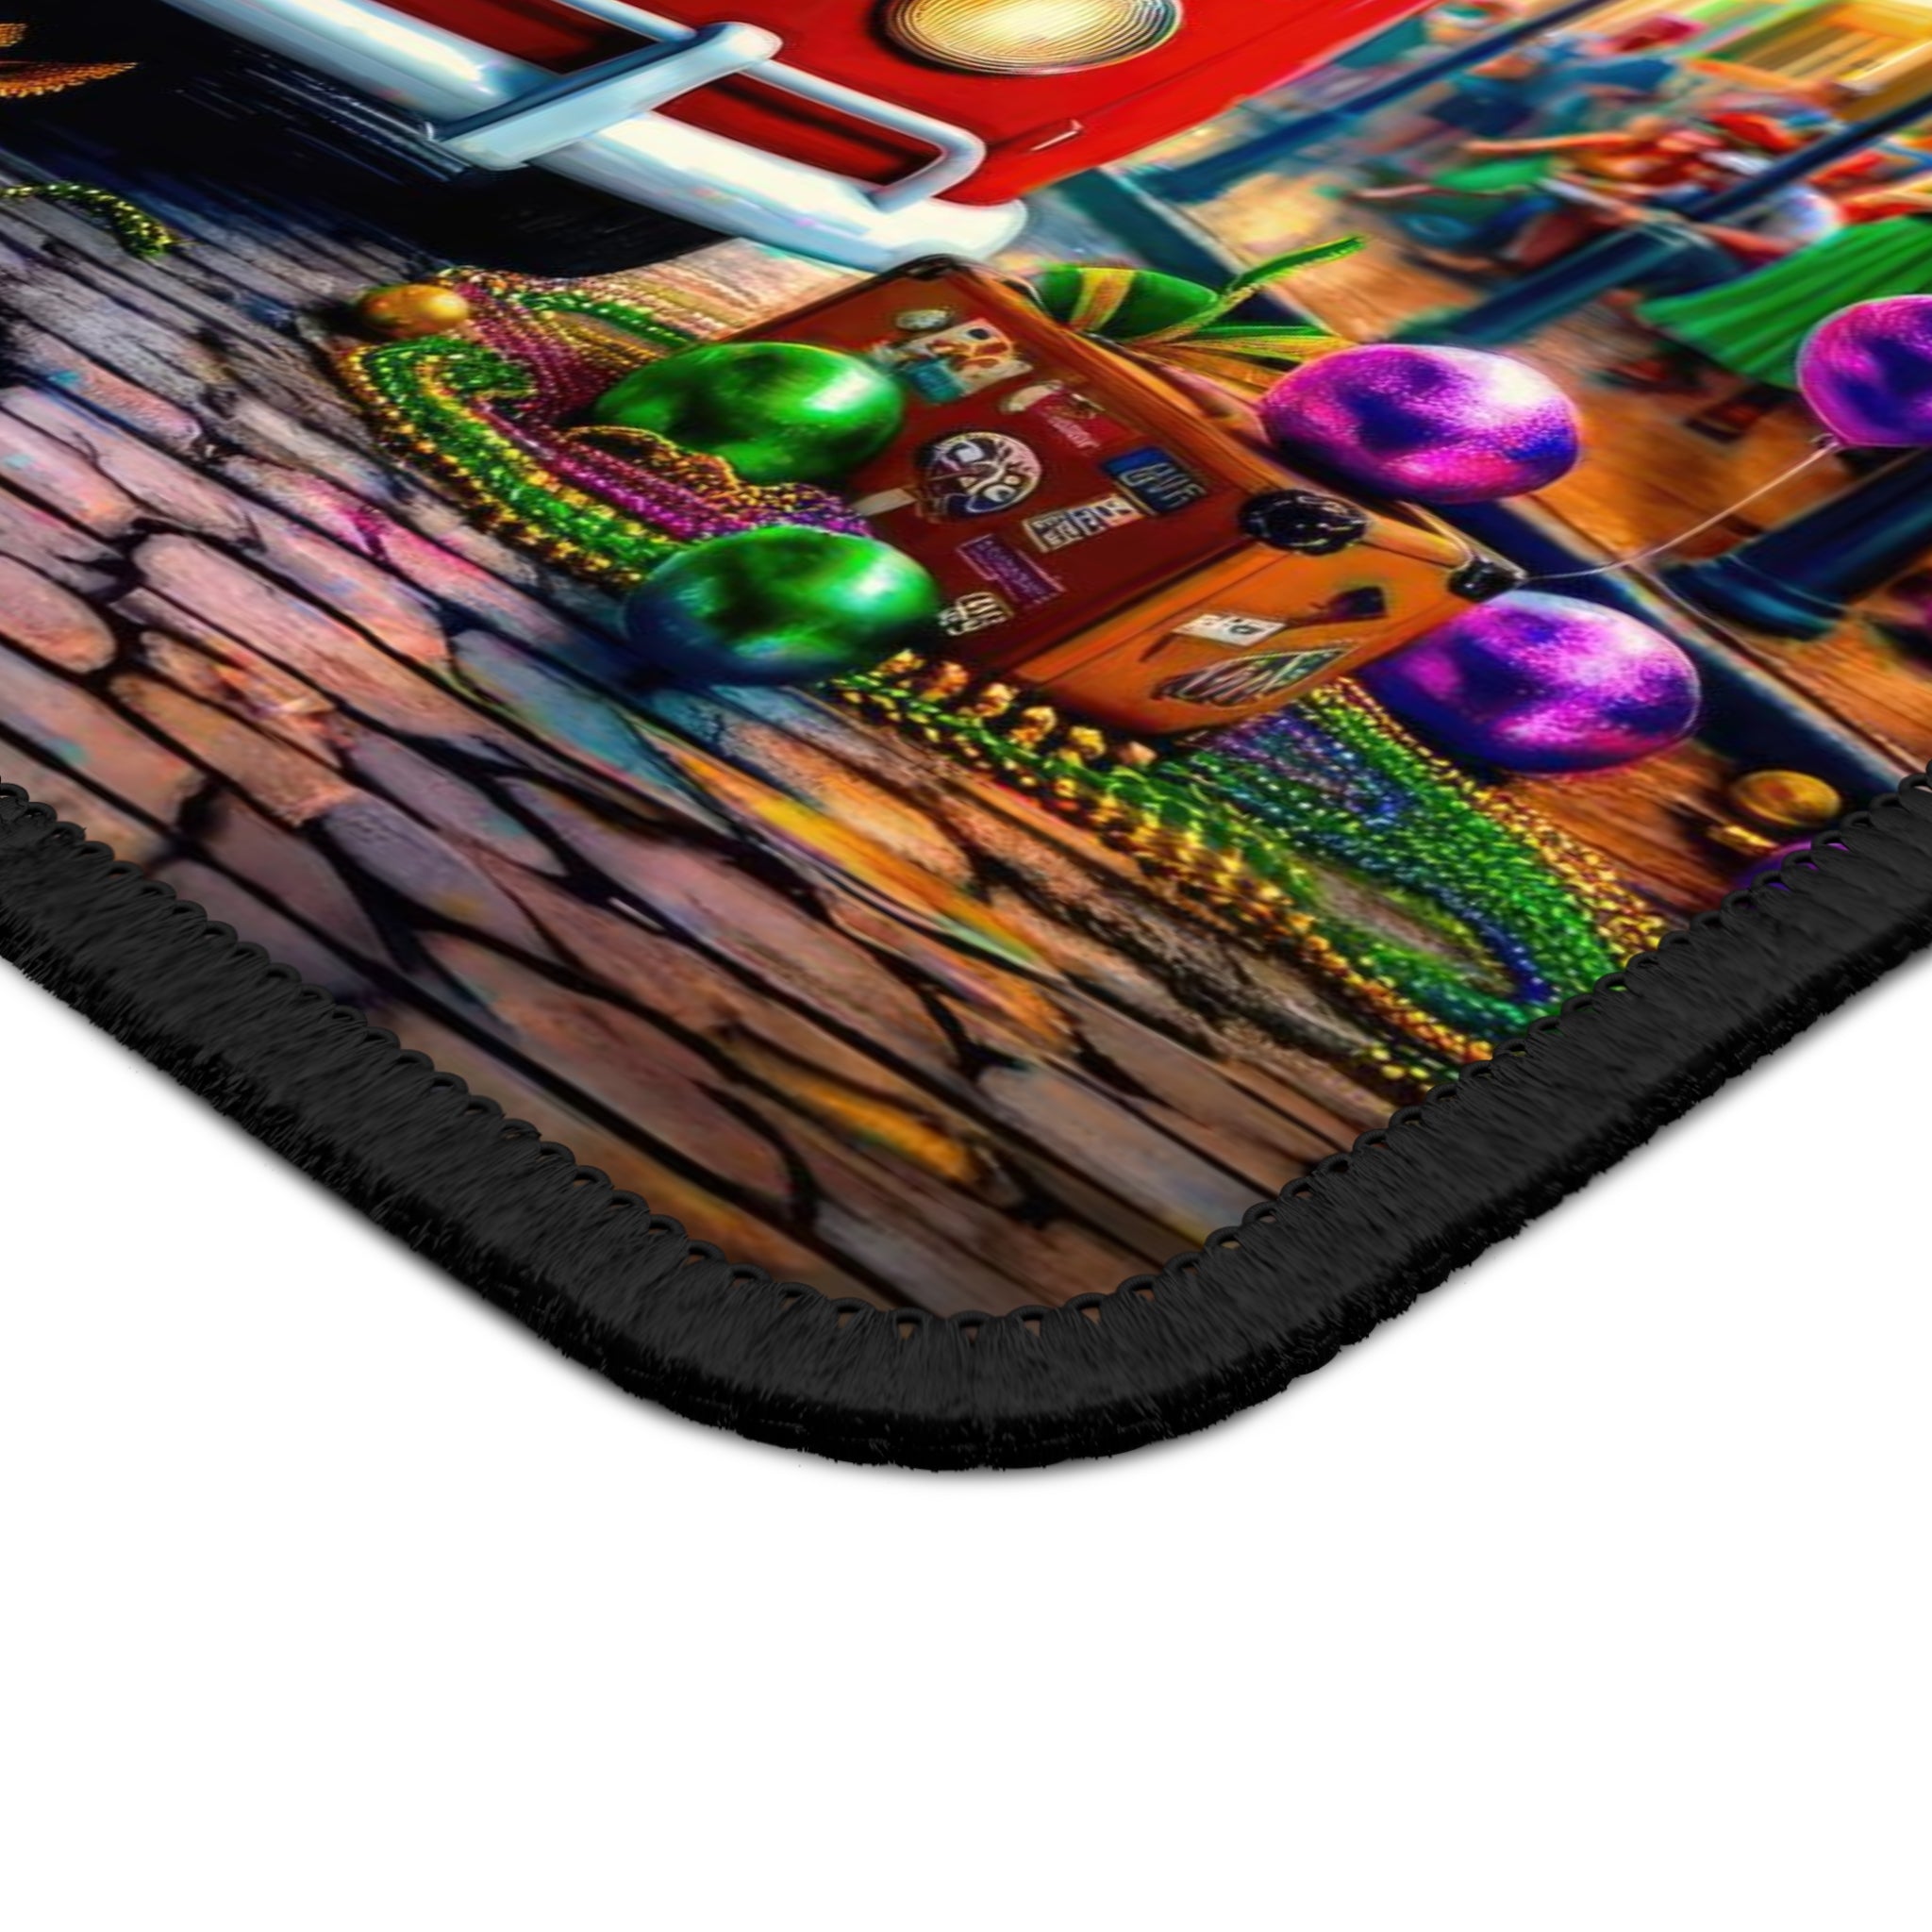 Lillianna and Hemsworth's Mardi Gras Vacation Gaming Mouse Pad